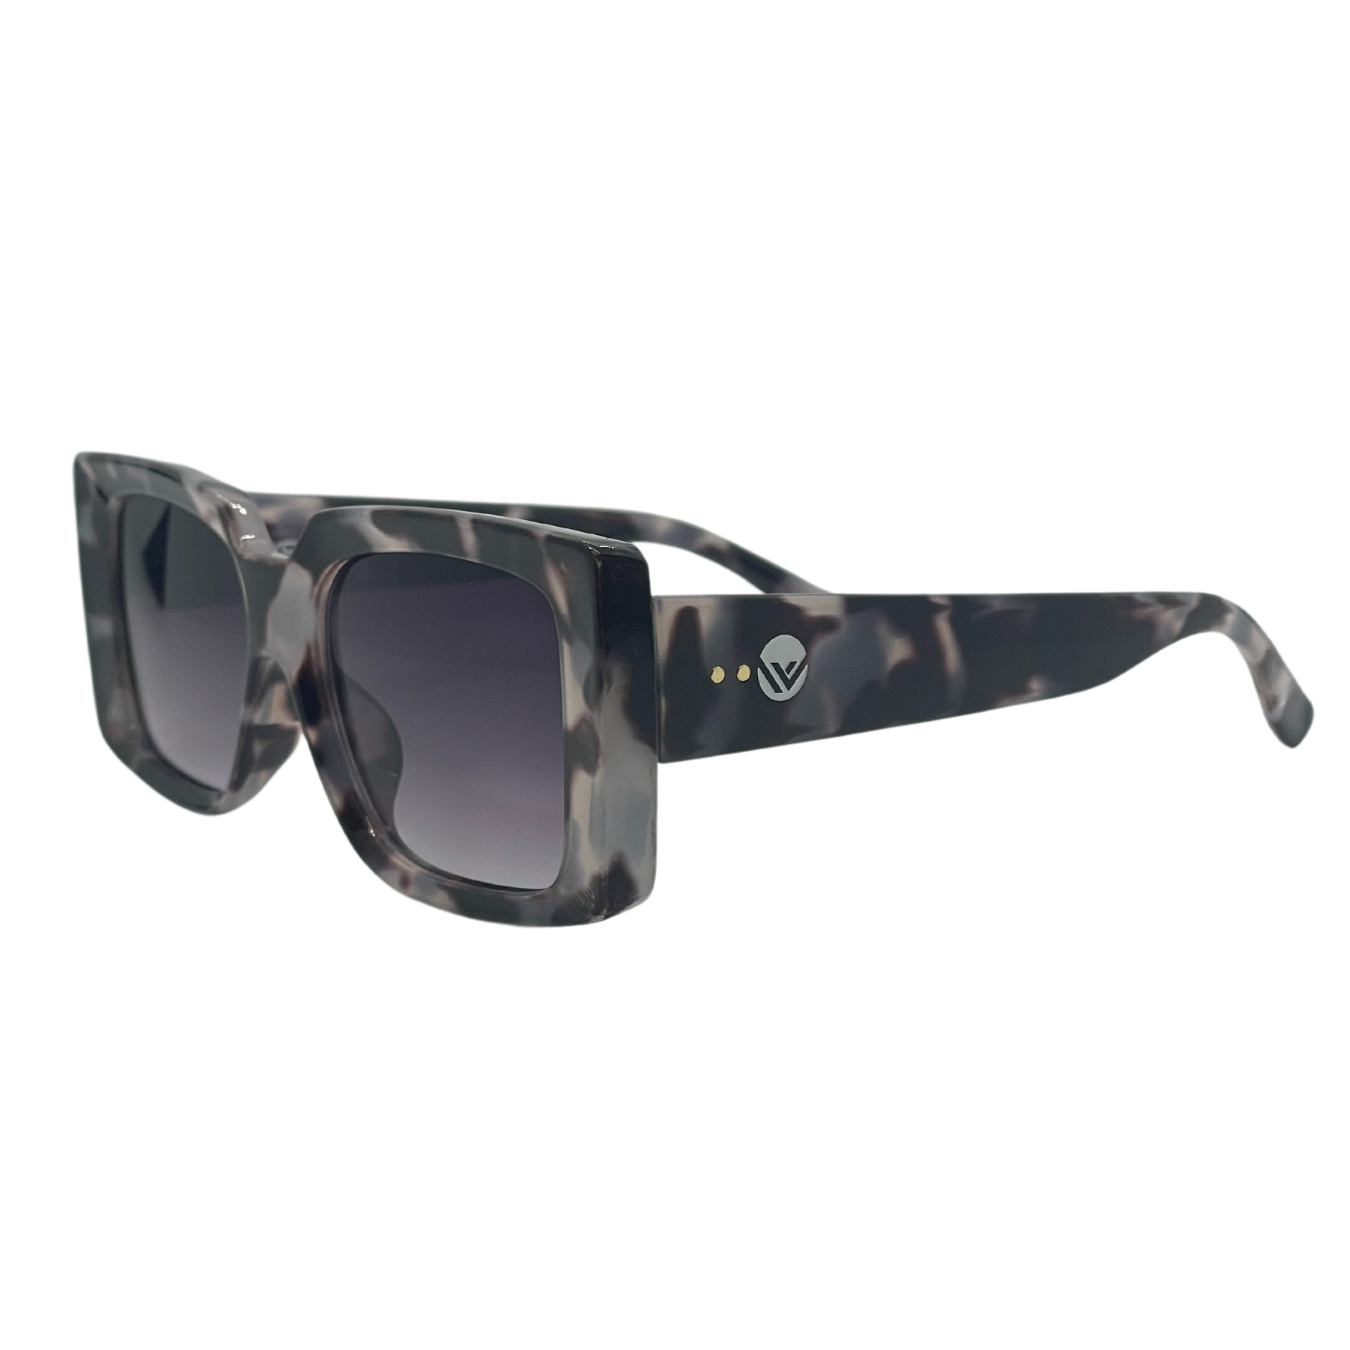 Coconut Grove Sunglasses - Woodensun Sunglasses | Eco-fashion eyewear